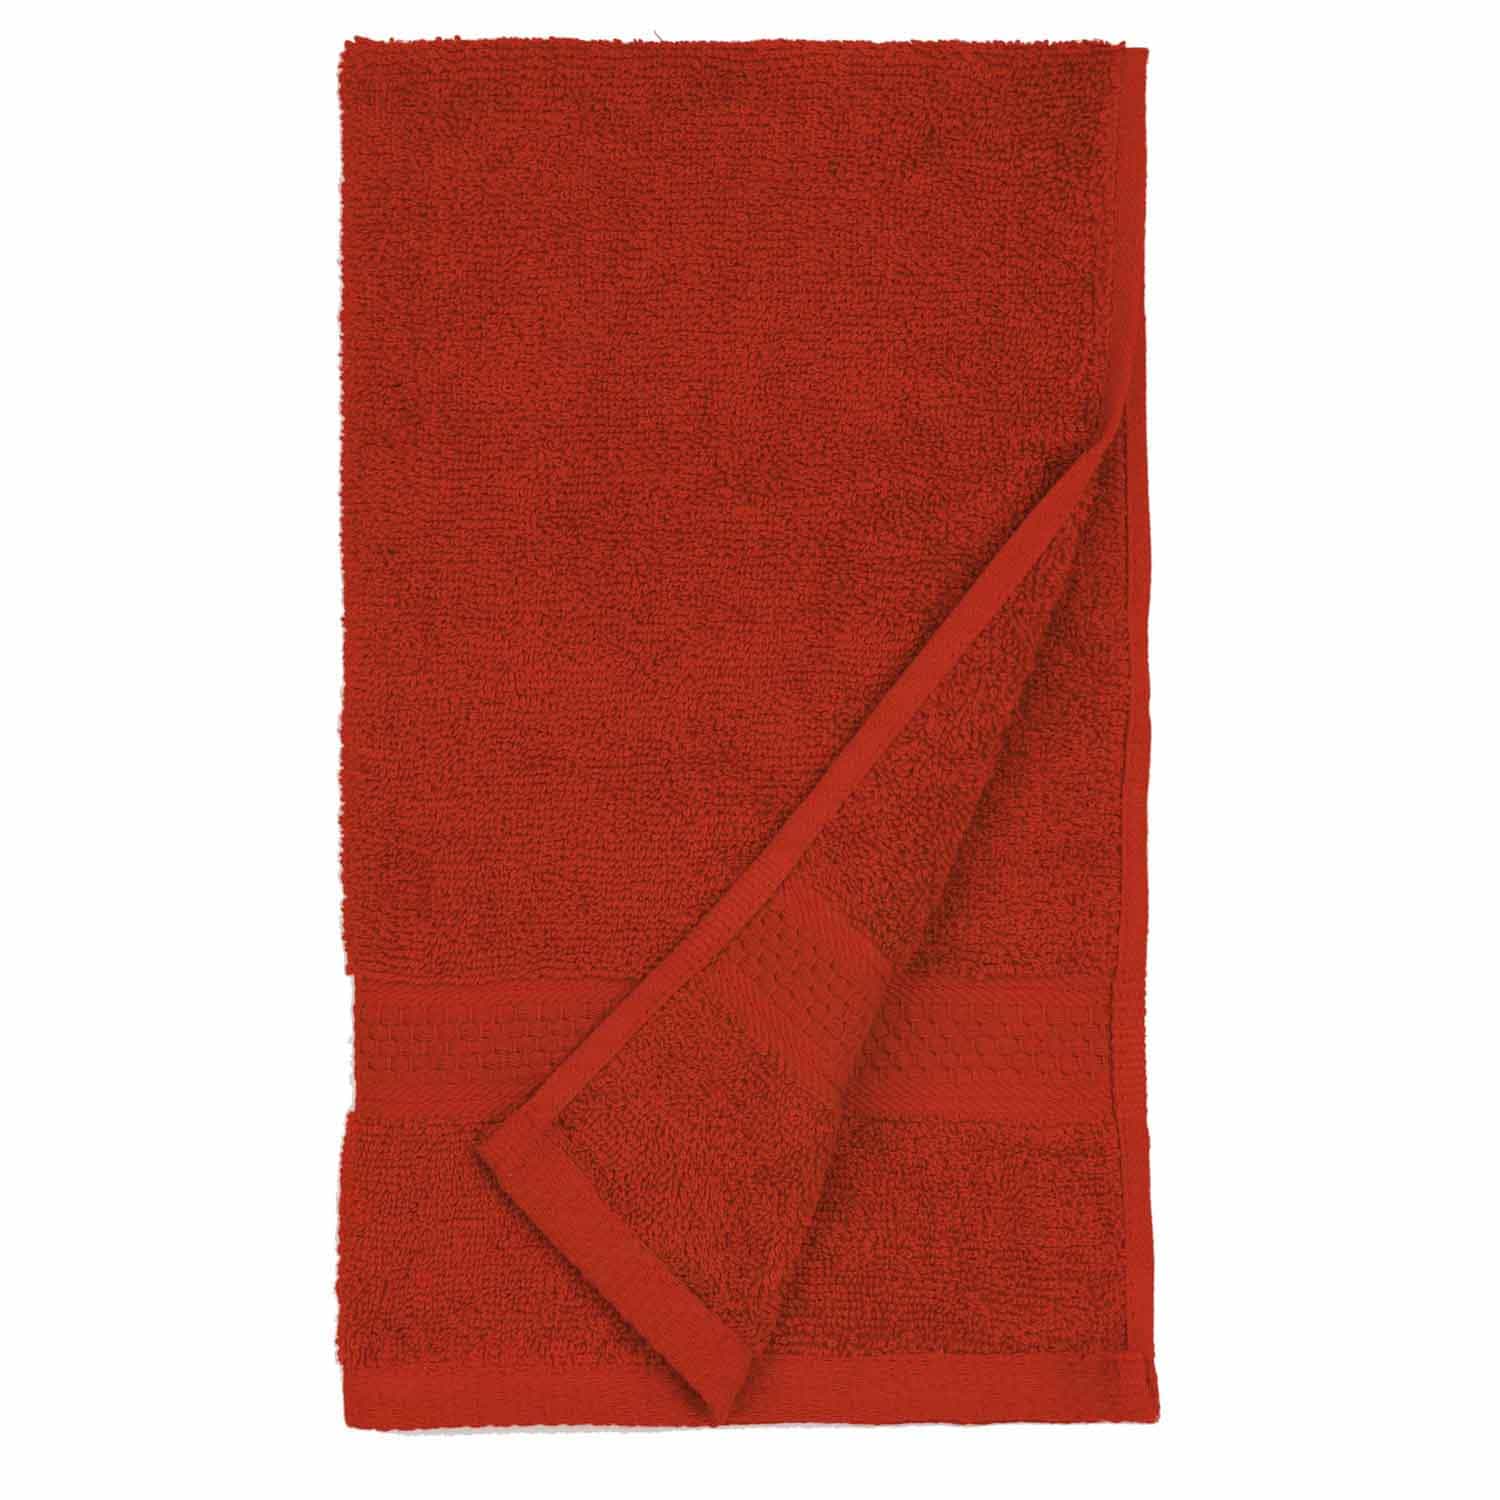 American Dawn | Jumbo 16X28 Inch Brick Red Car Wash Towel